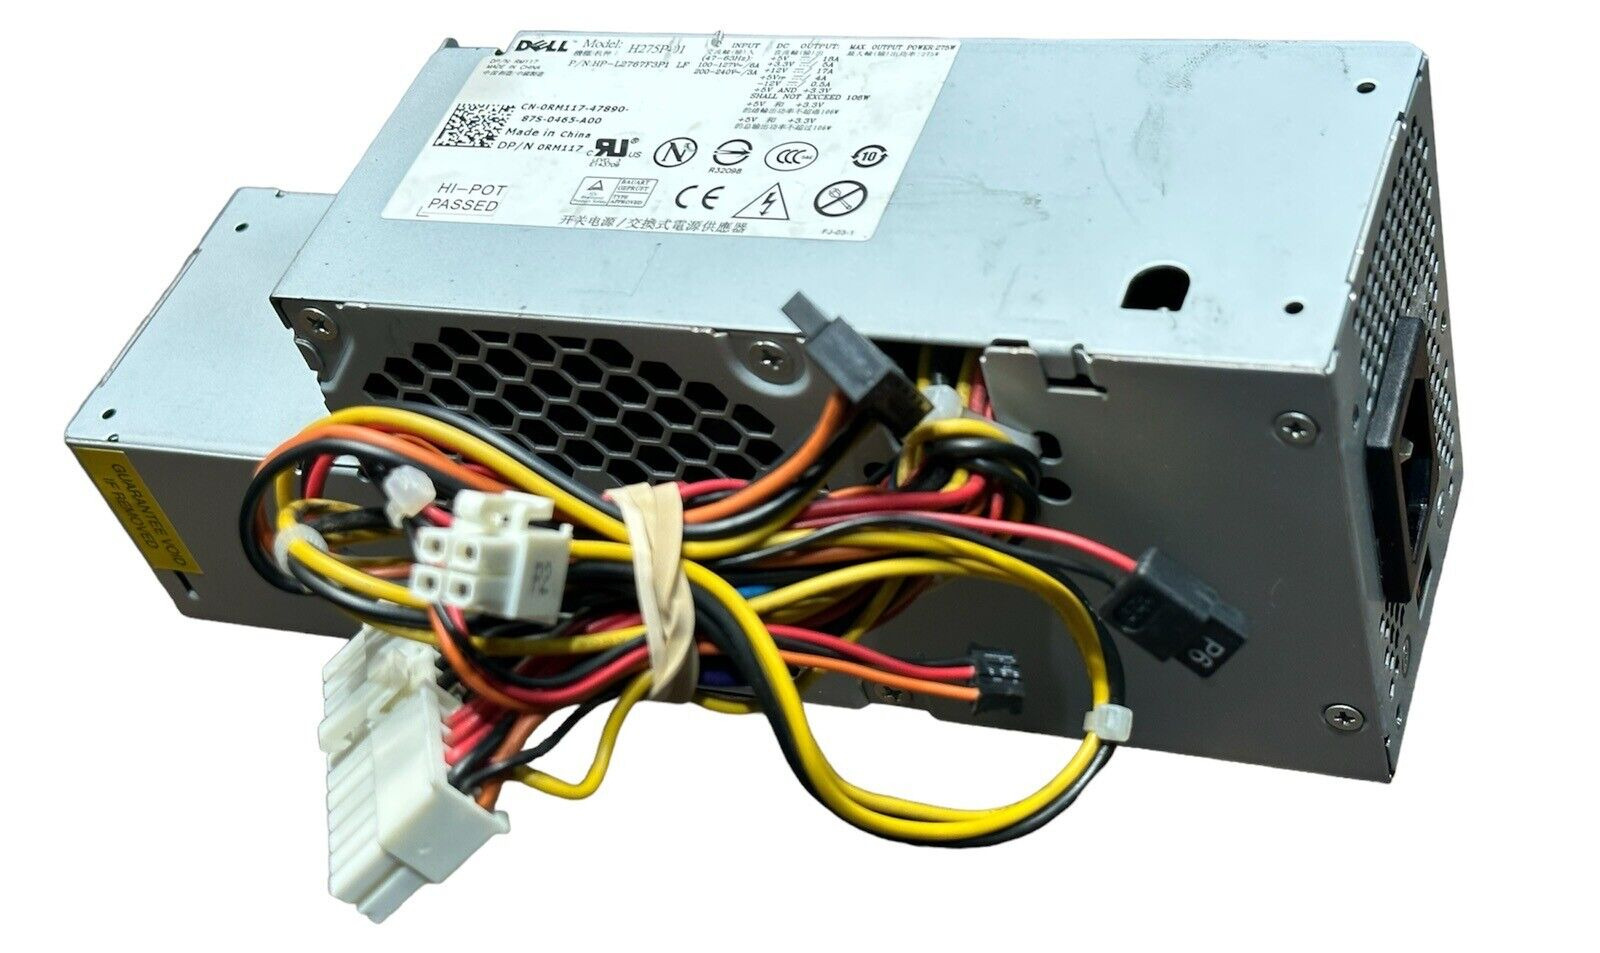 Dell Optiplex 330 745 755 Power Supply PW124 WU142 RM117 0RM117 H275P-01 275W